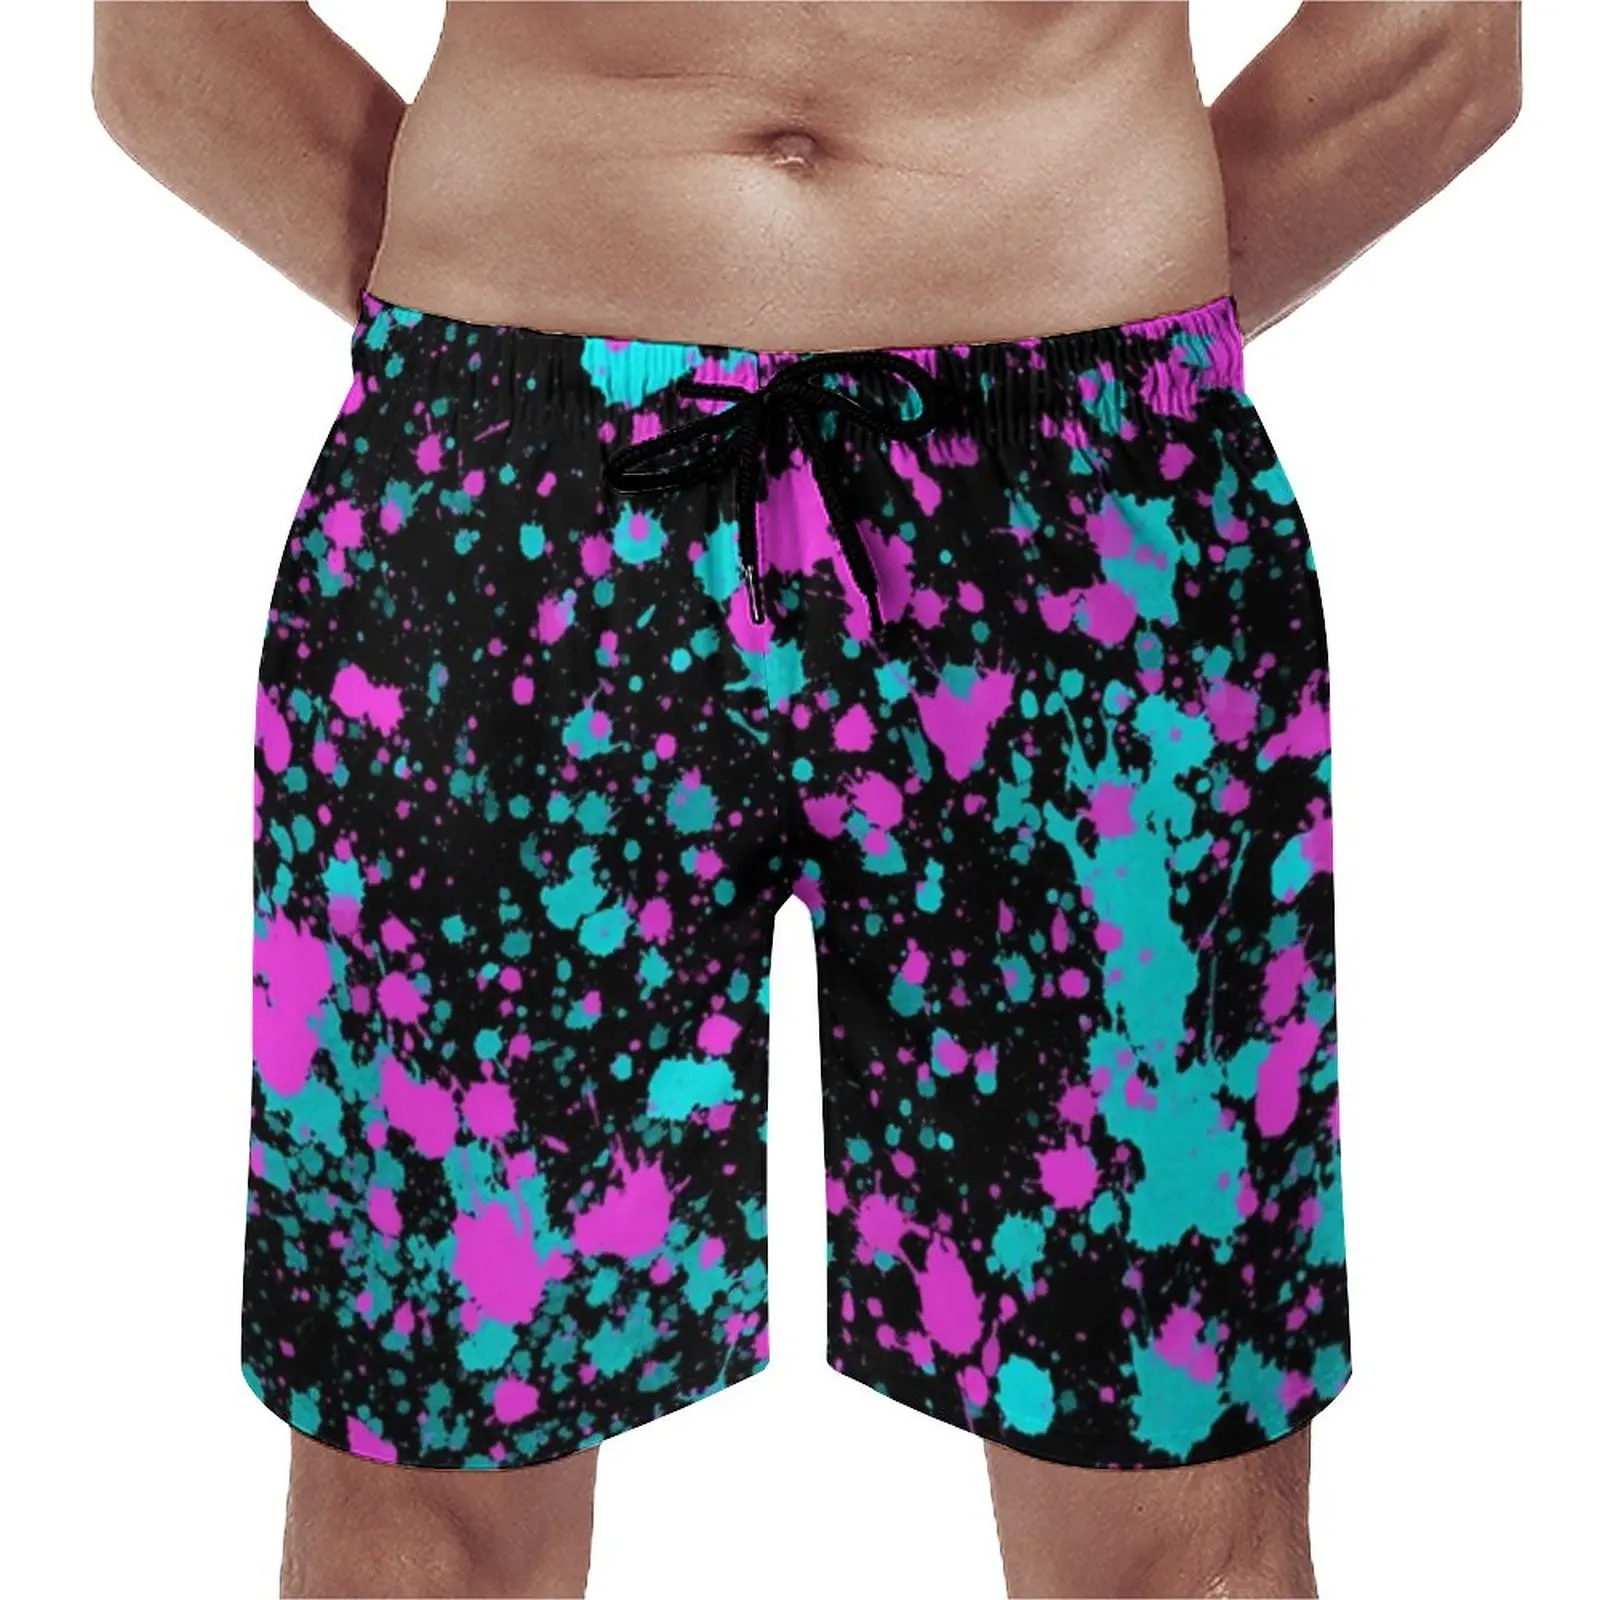 

Paint Splatter Board Shorts Modern Pink and Aqua Cute Board Short Pants Male Design Surfing Comfortable Swim Trunks Gift Idea